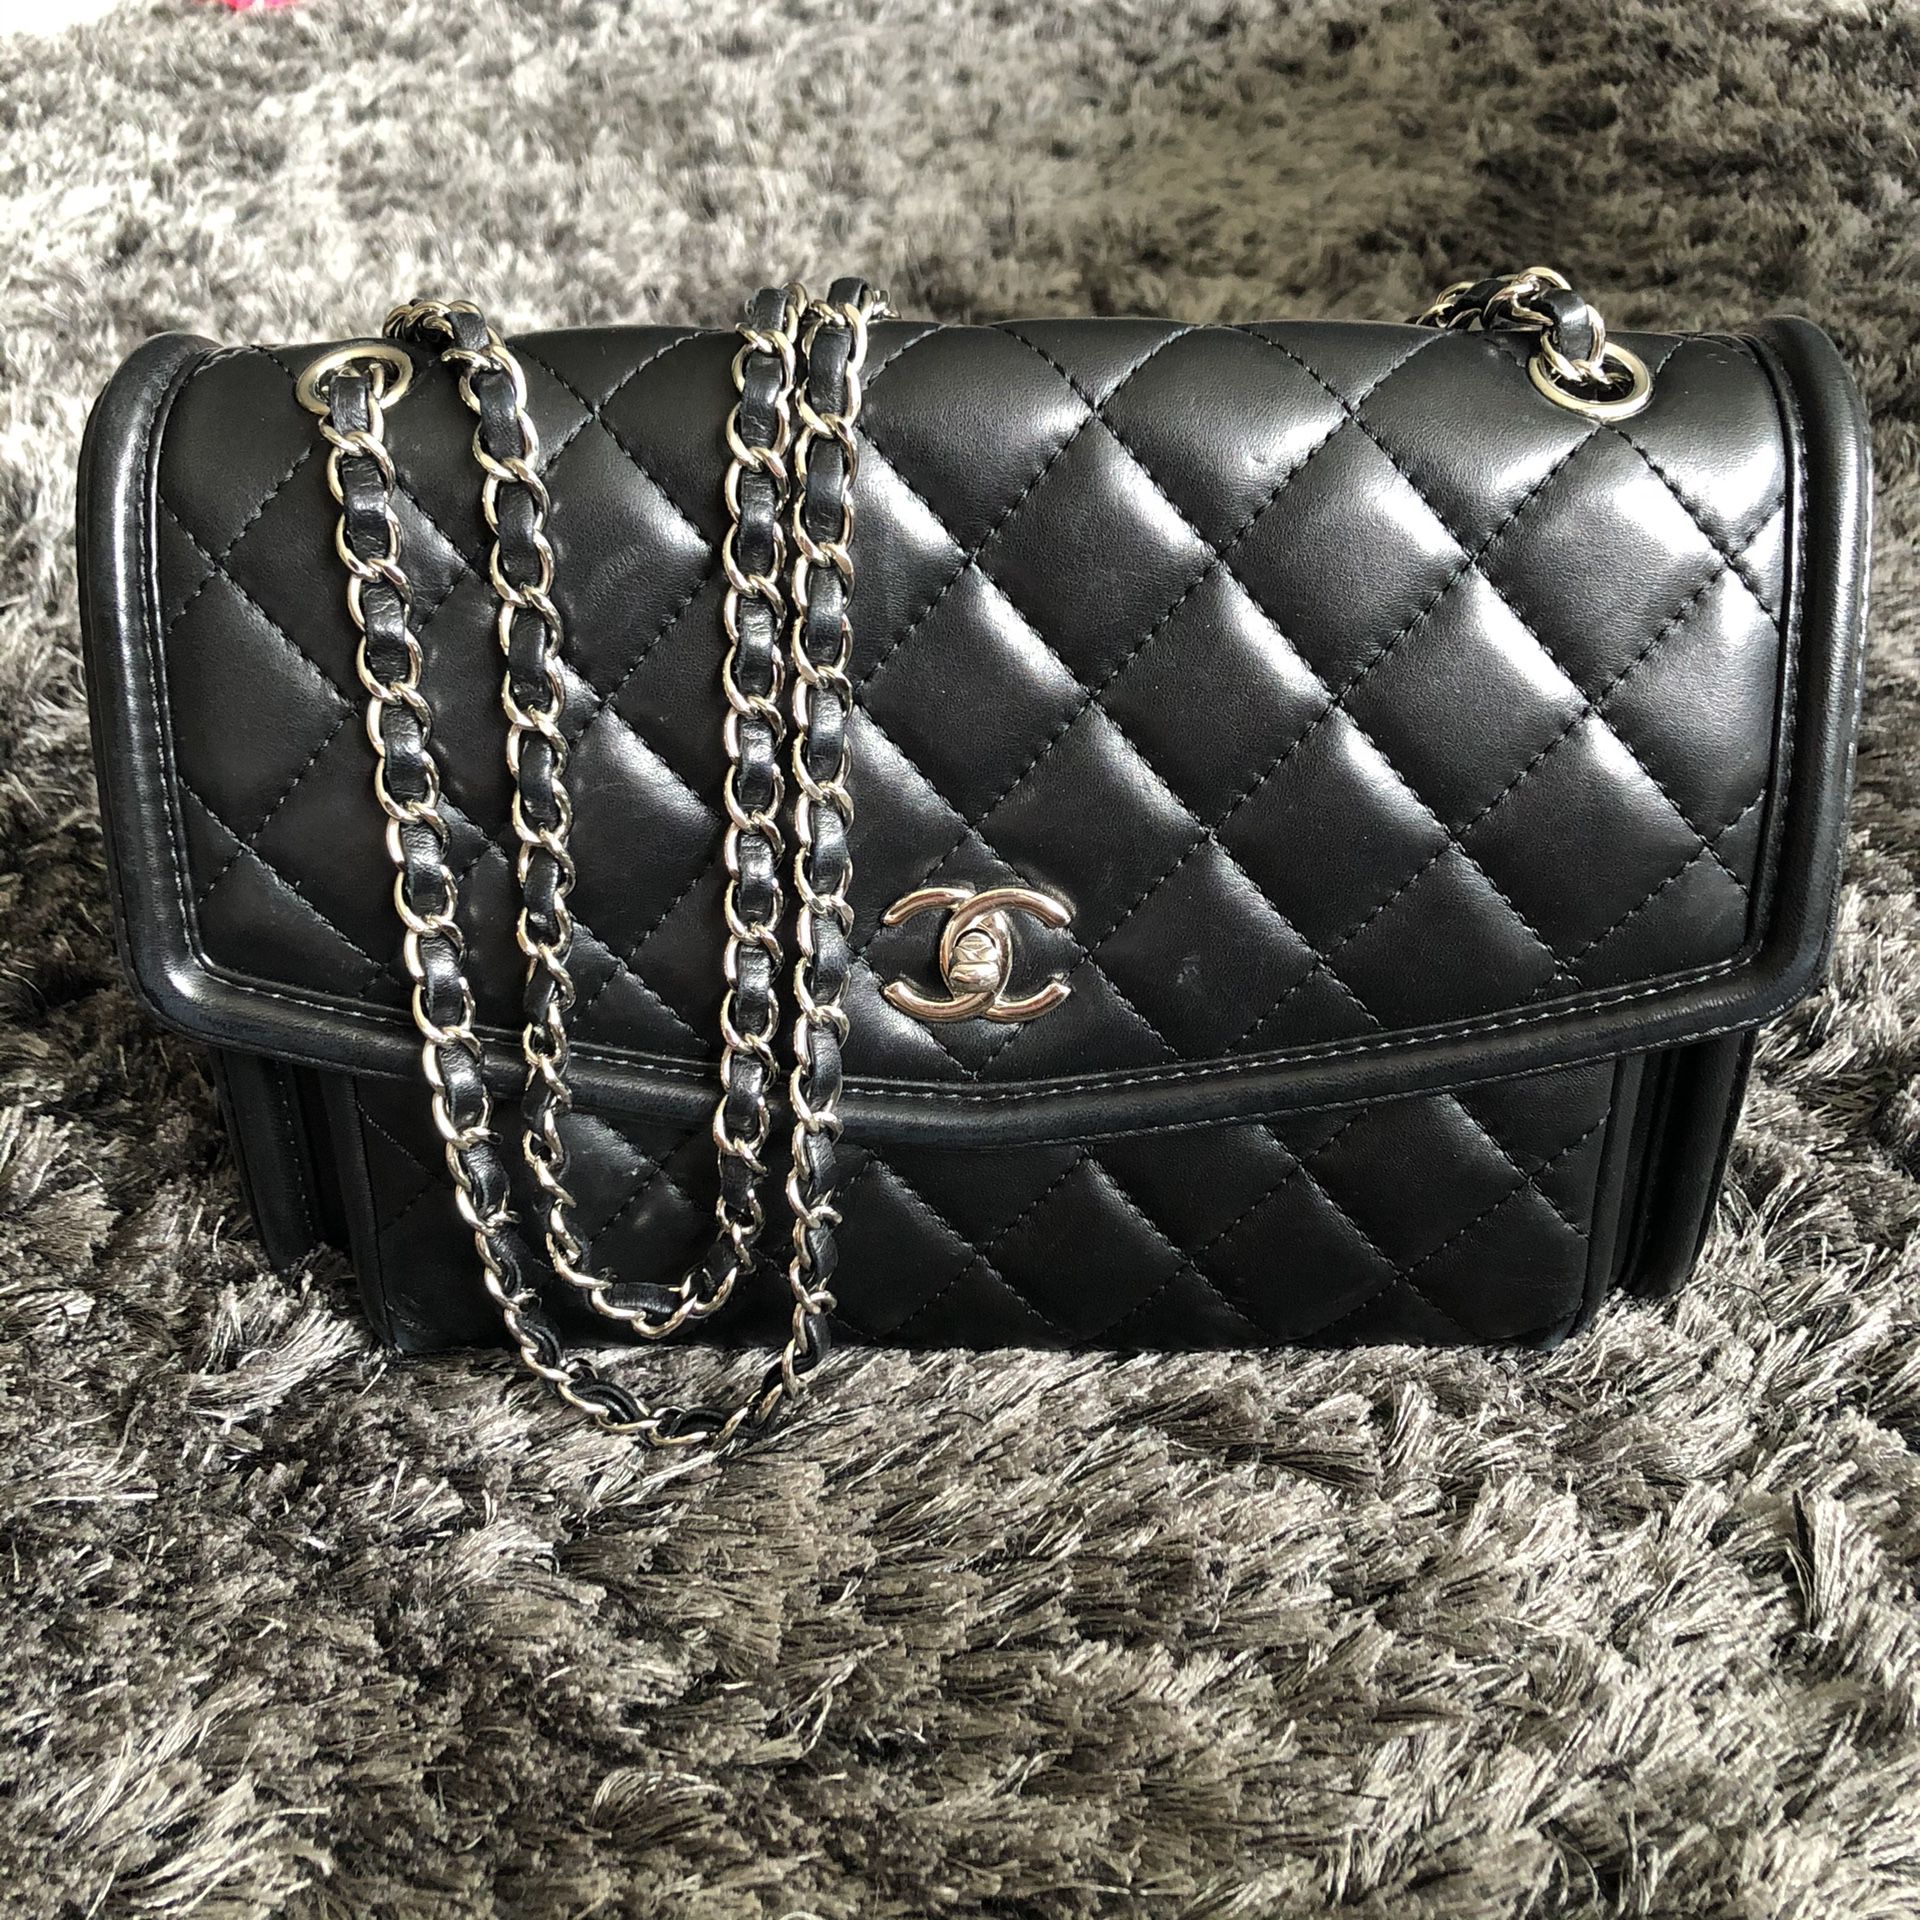 Authentic Chanel Jumbo Flap Bag Black Lambskin Leather